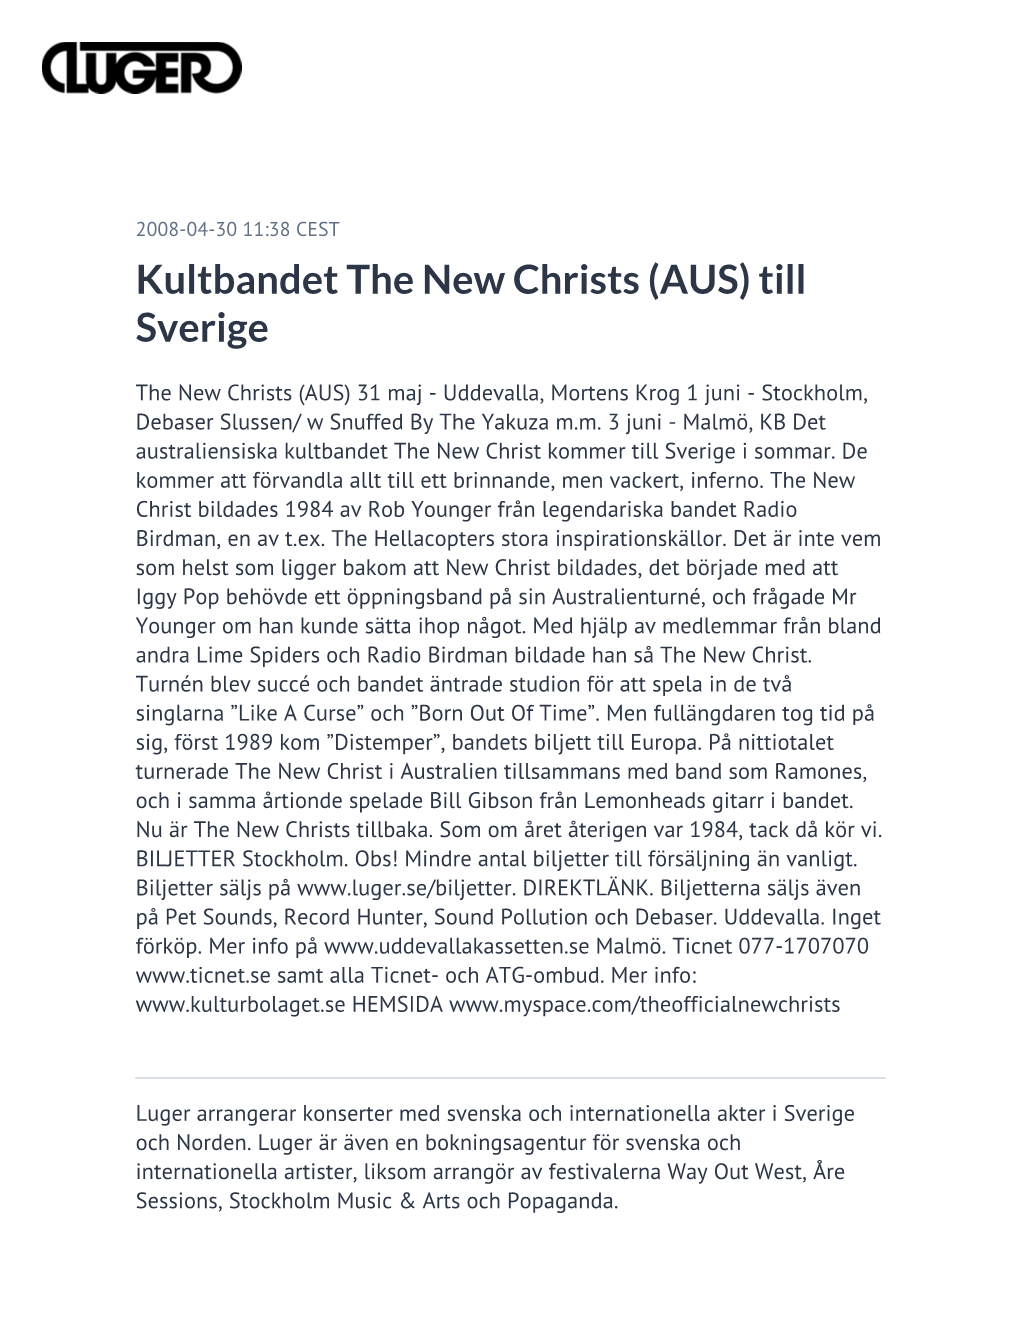 Kultbandet the New Christs (AUS) Till Sverige